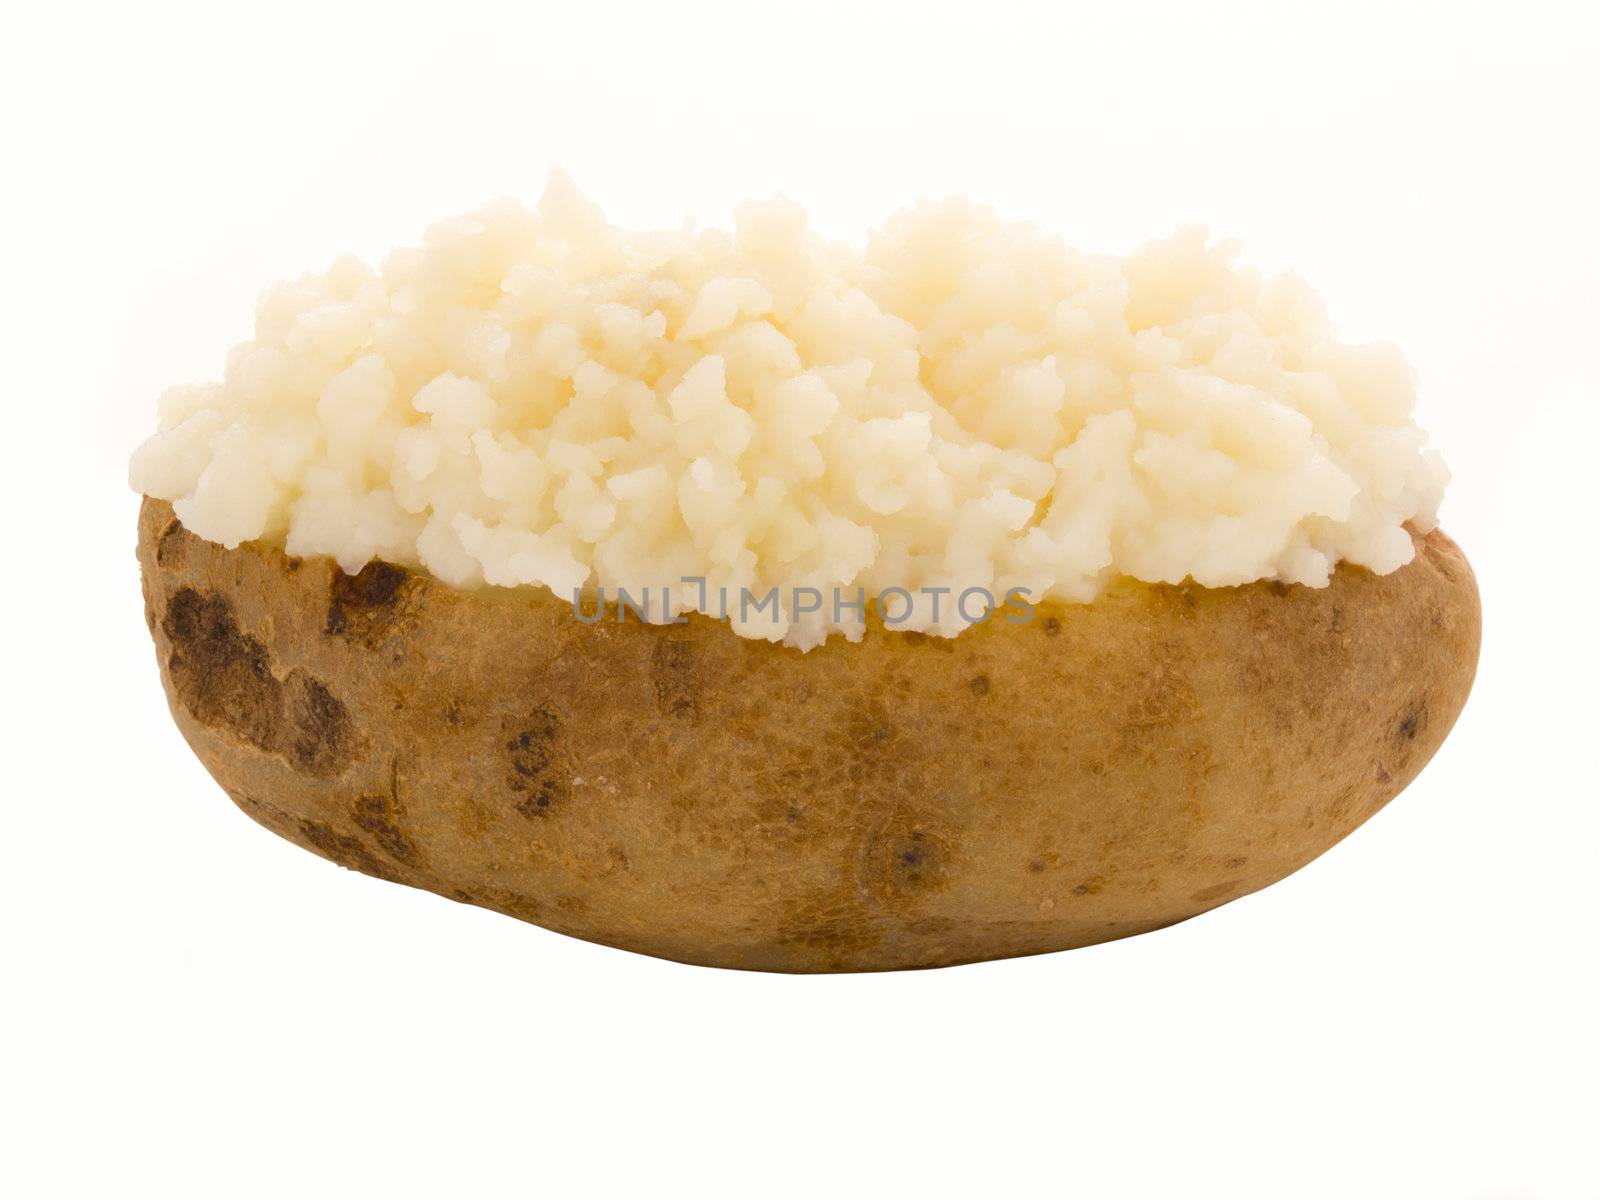 baked potato by zkruger